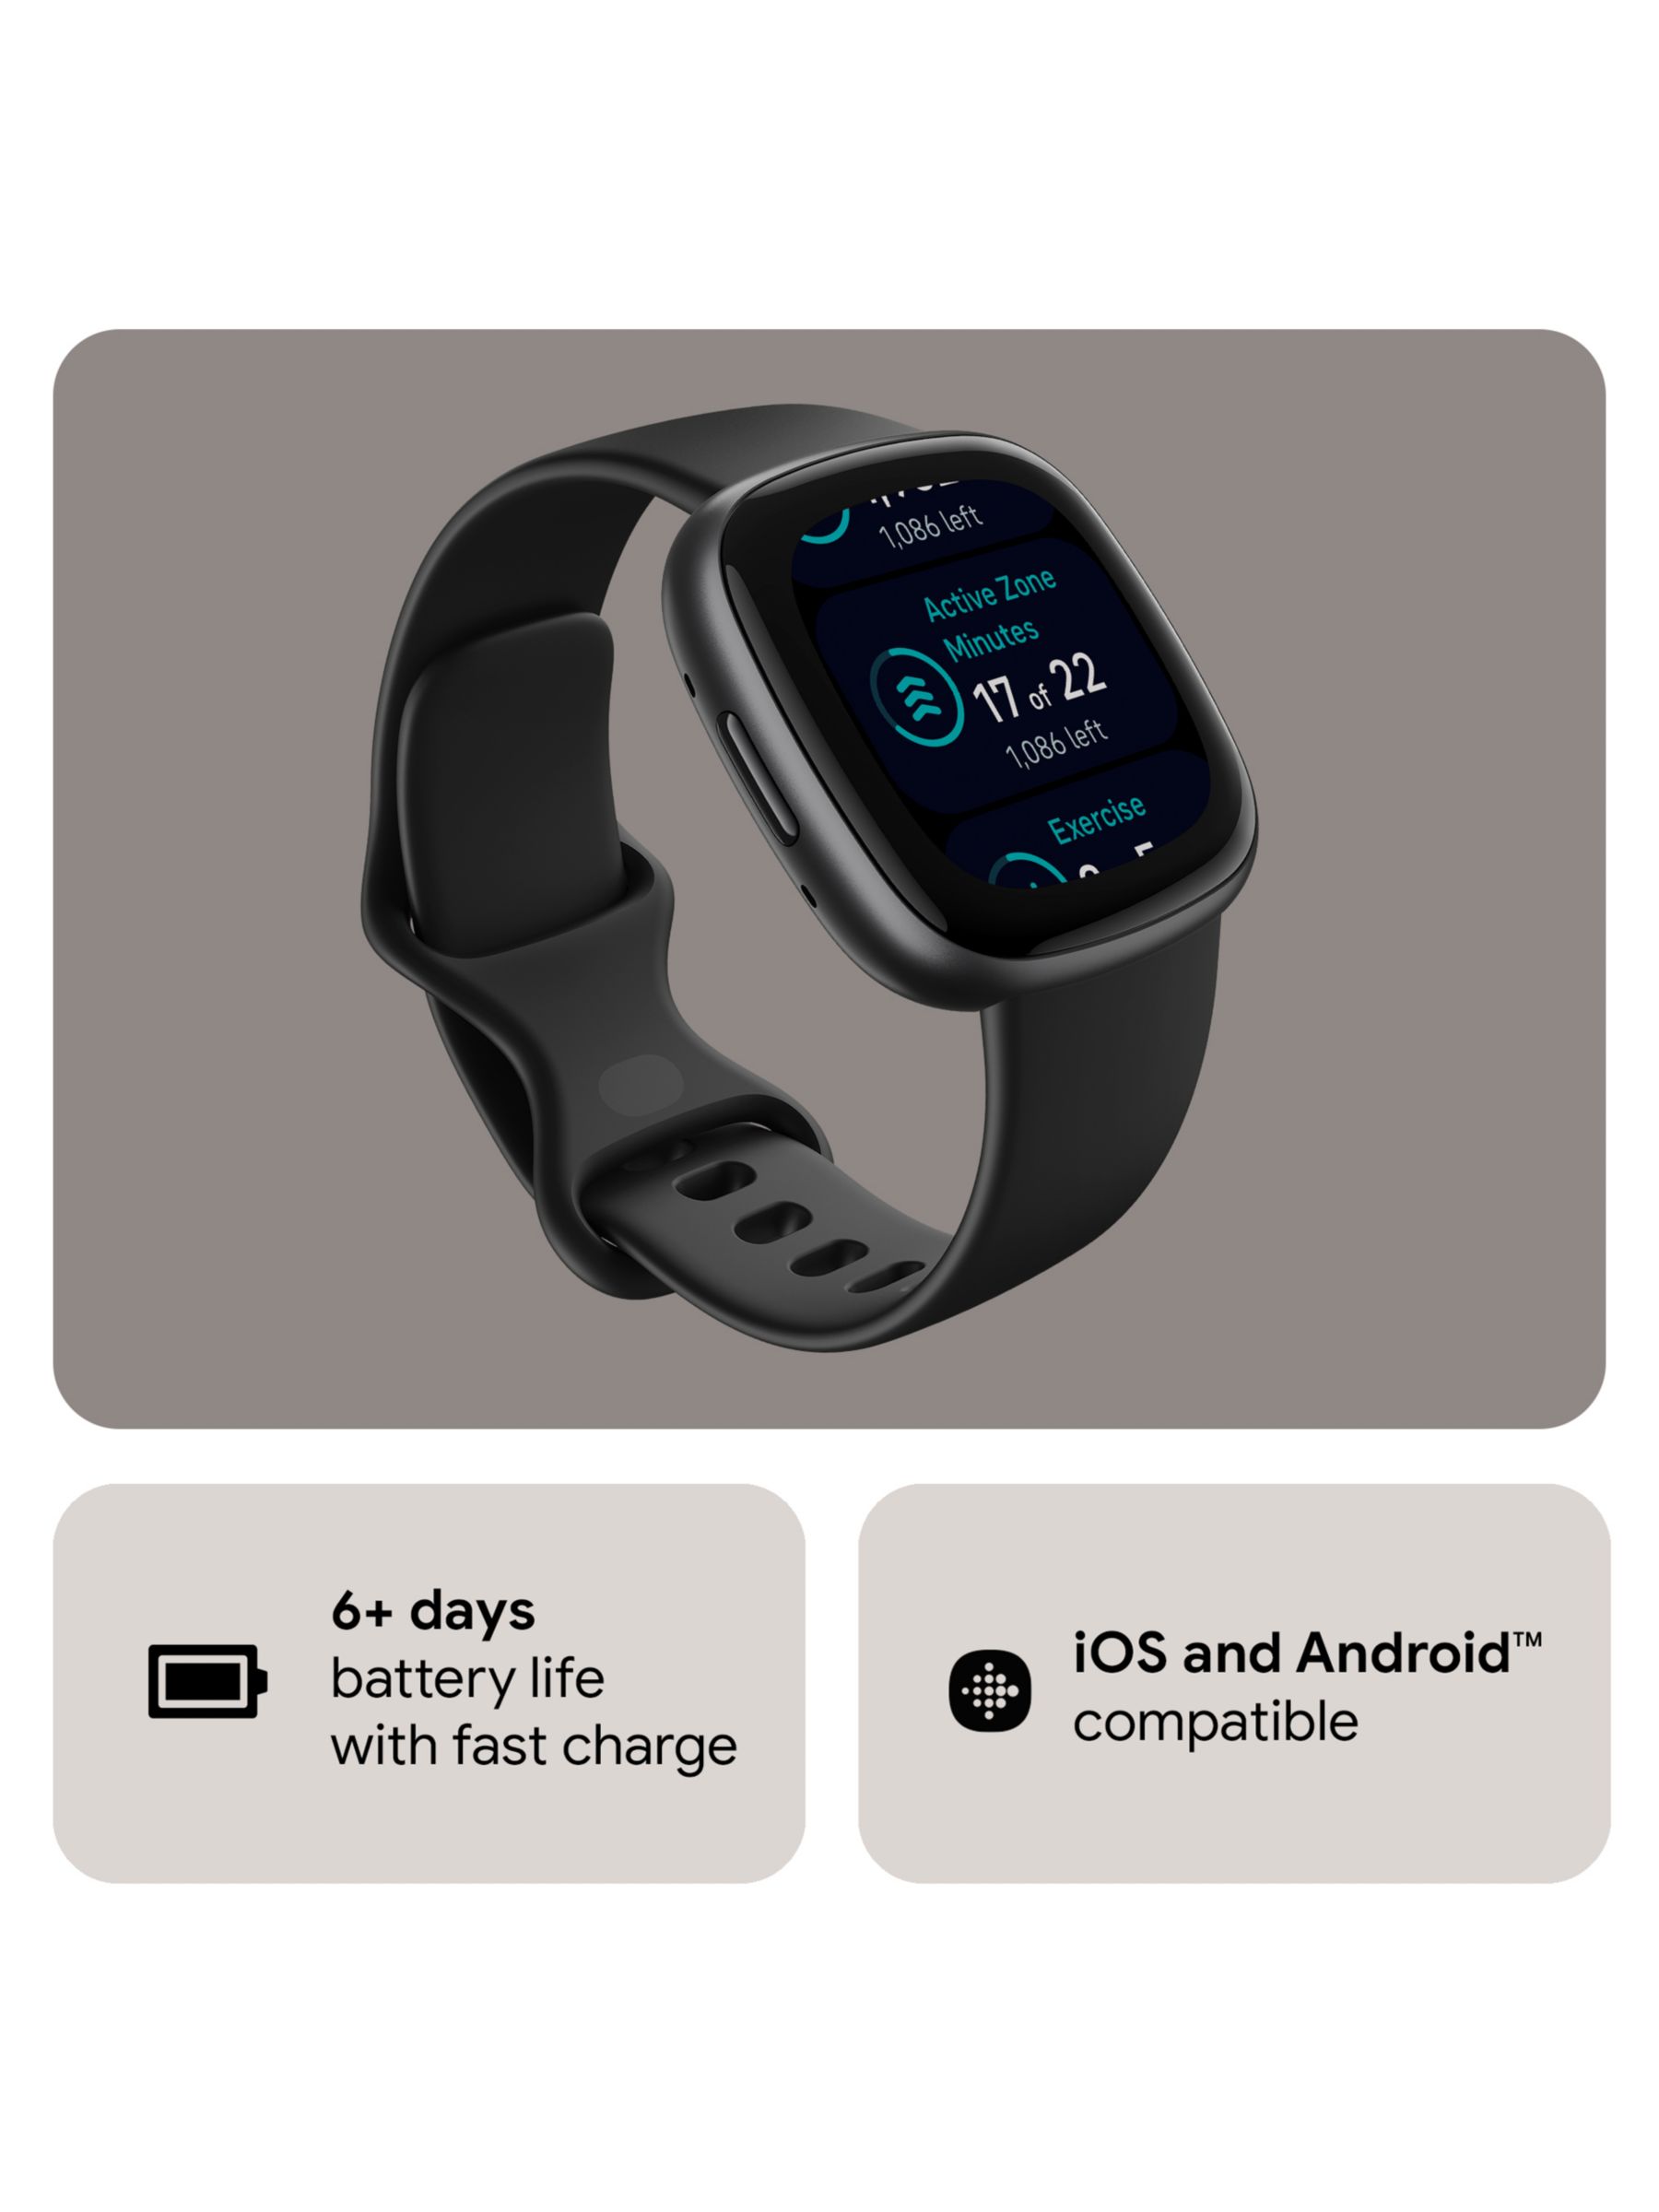 Fitbit Versa 4 smartwatch review